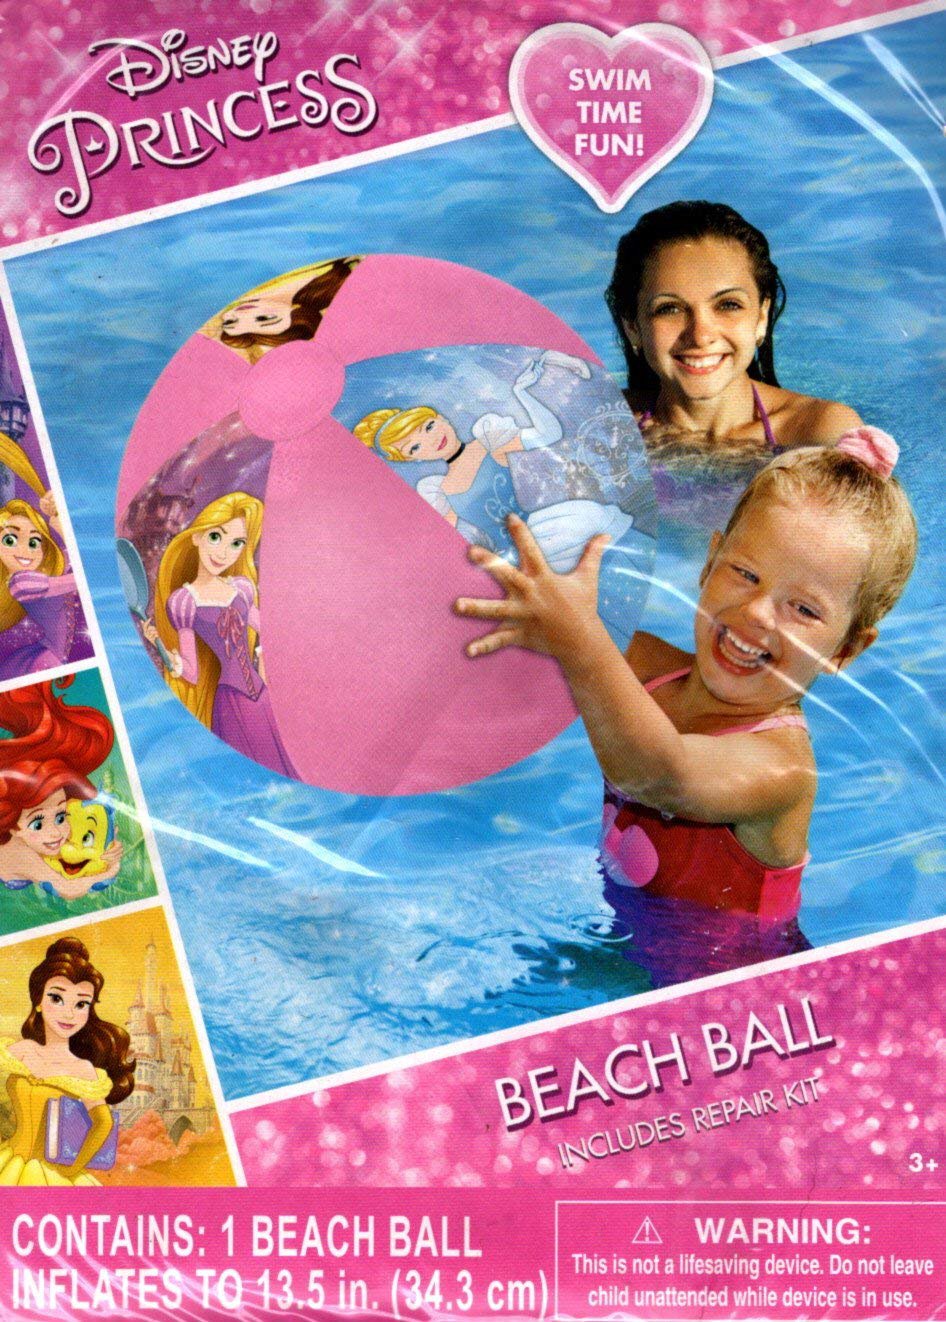 Disney Princess - Beach Ball - Includes Repair Kit